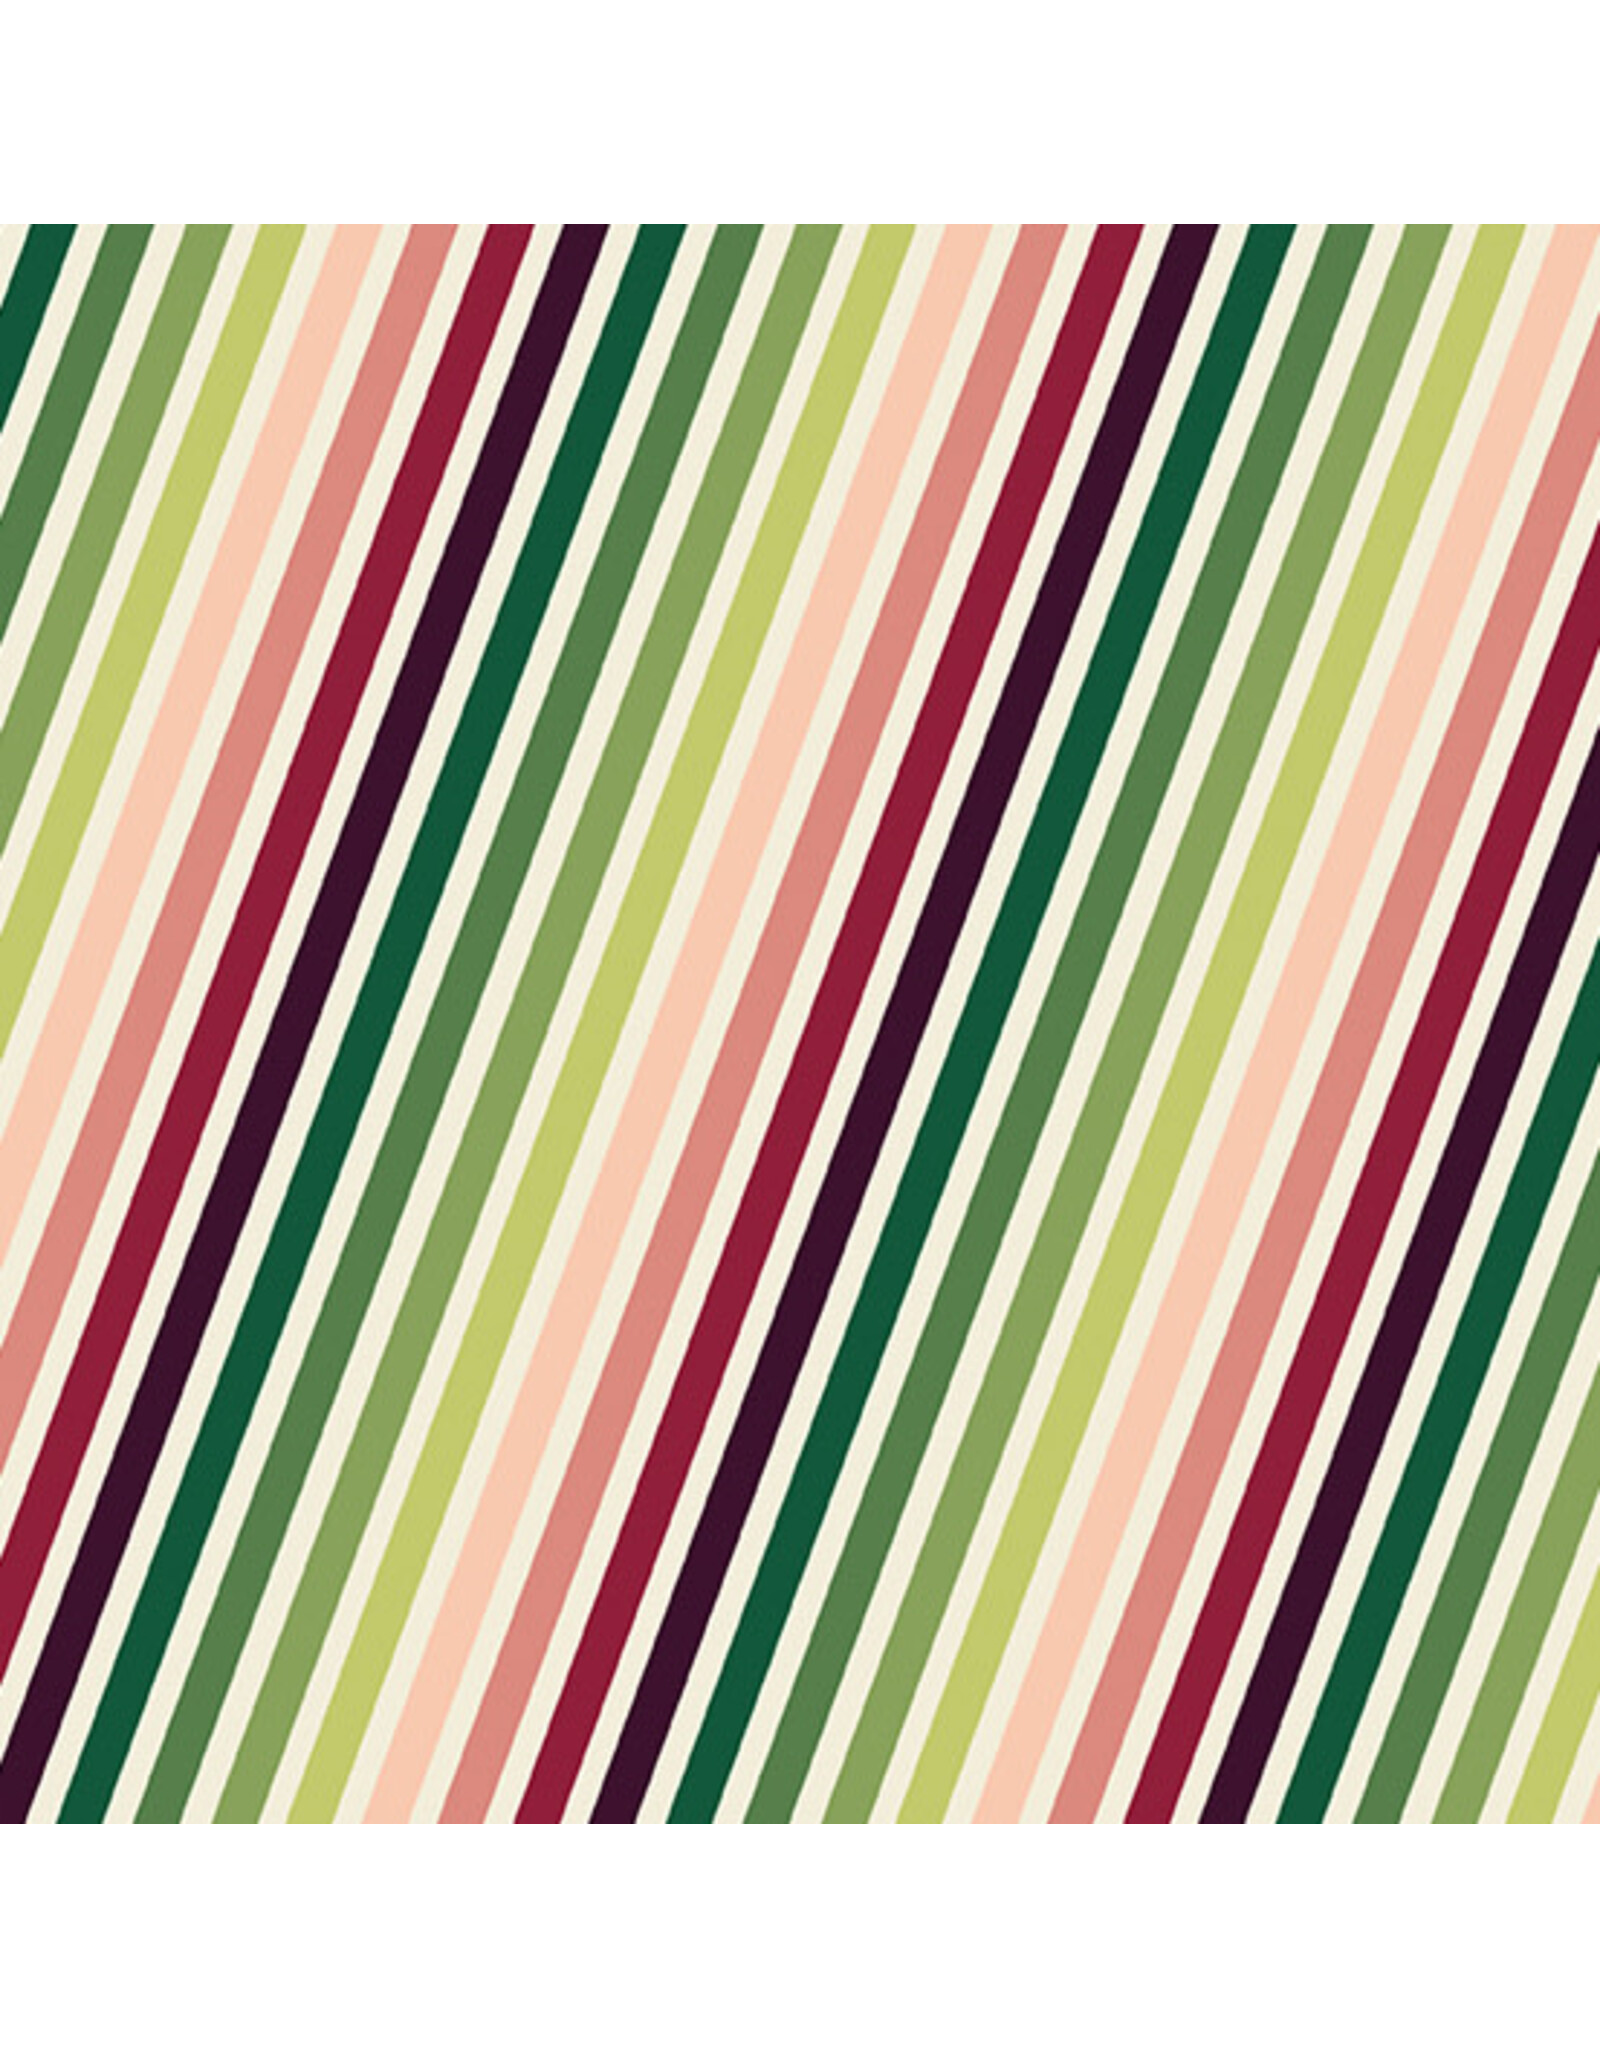 Giucy Giuce Natale, Stripe in Classica, Fabric Half-Yards